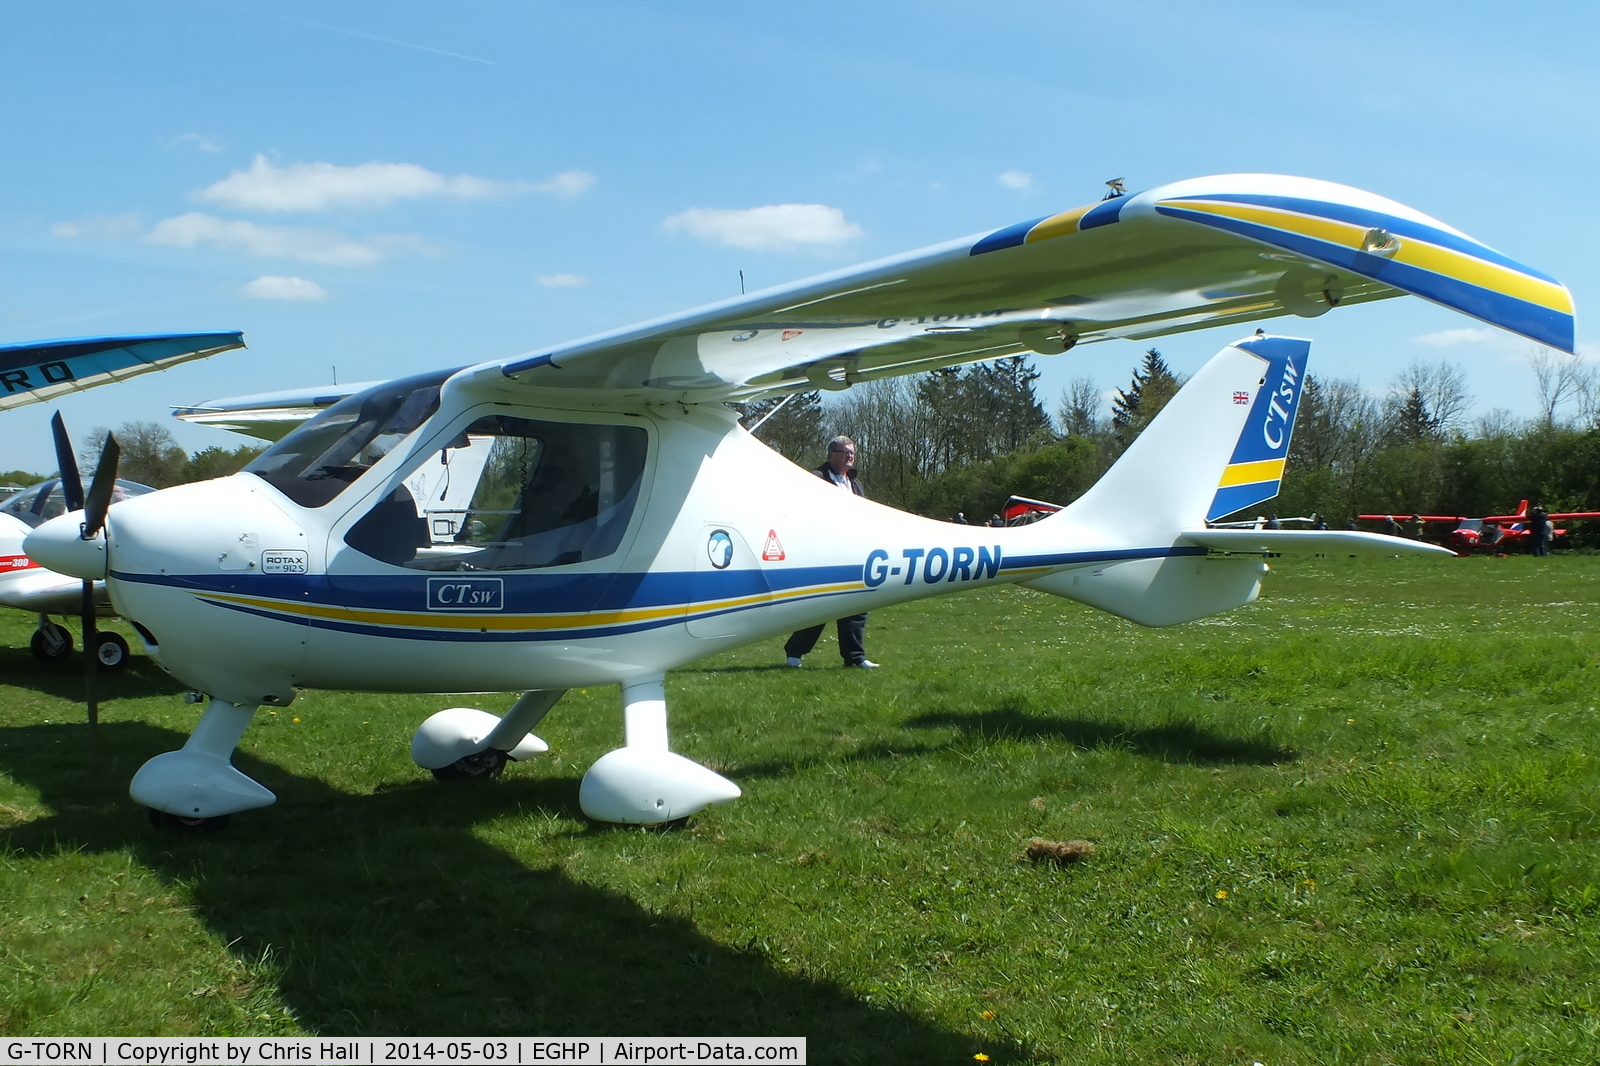 G-TORN, 2006 Flight Design CTSW C/N 8189, at the 2014 Microlight Trade Fair, Popham